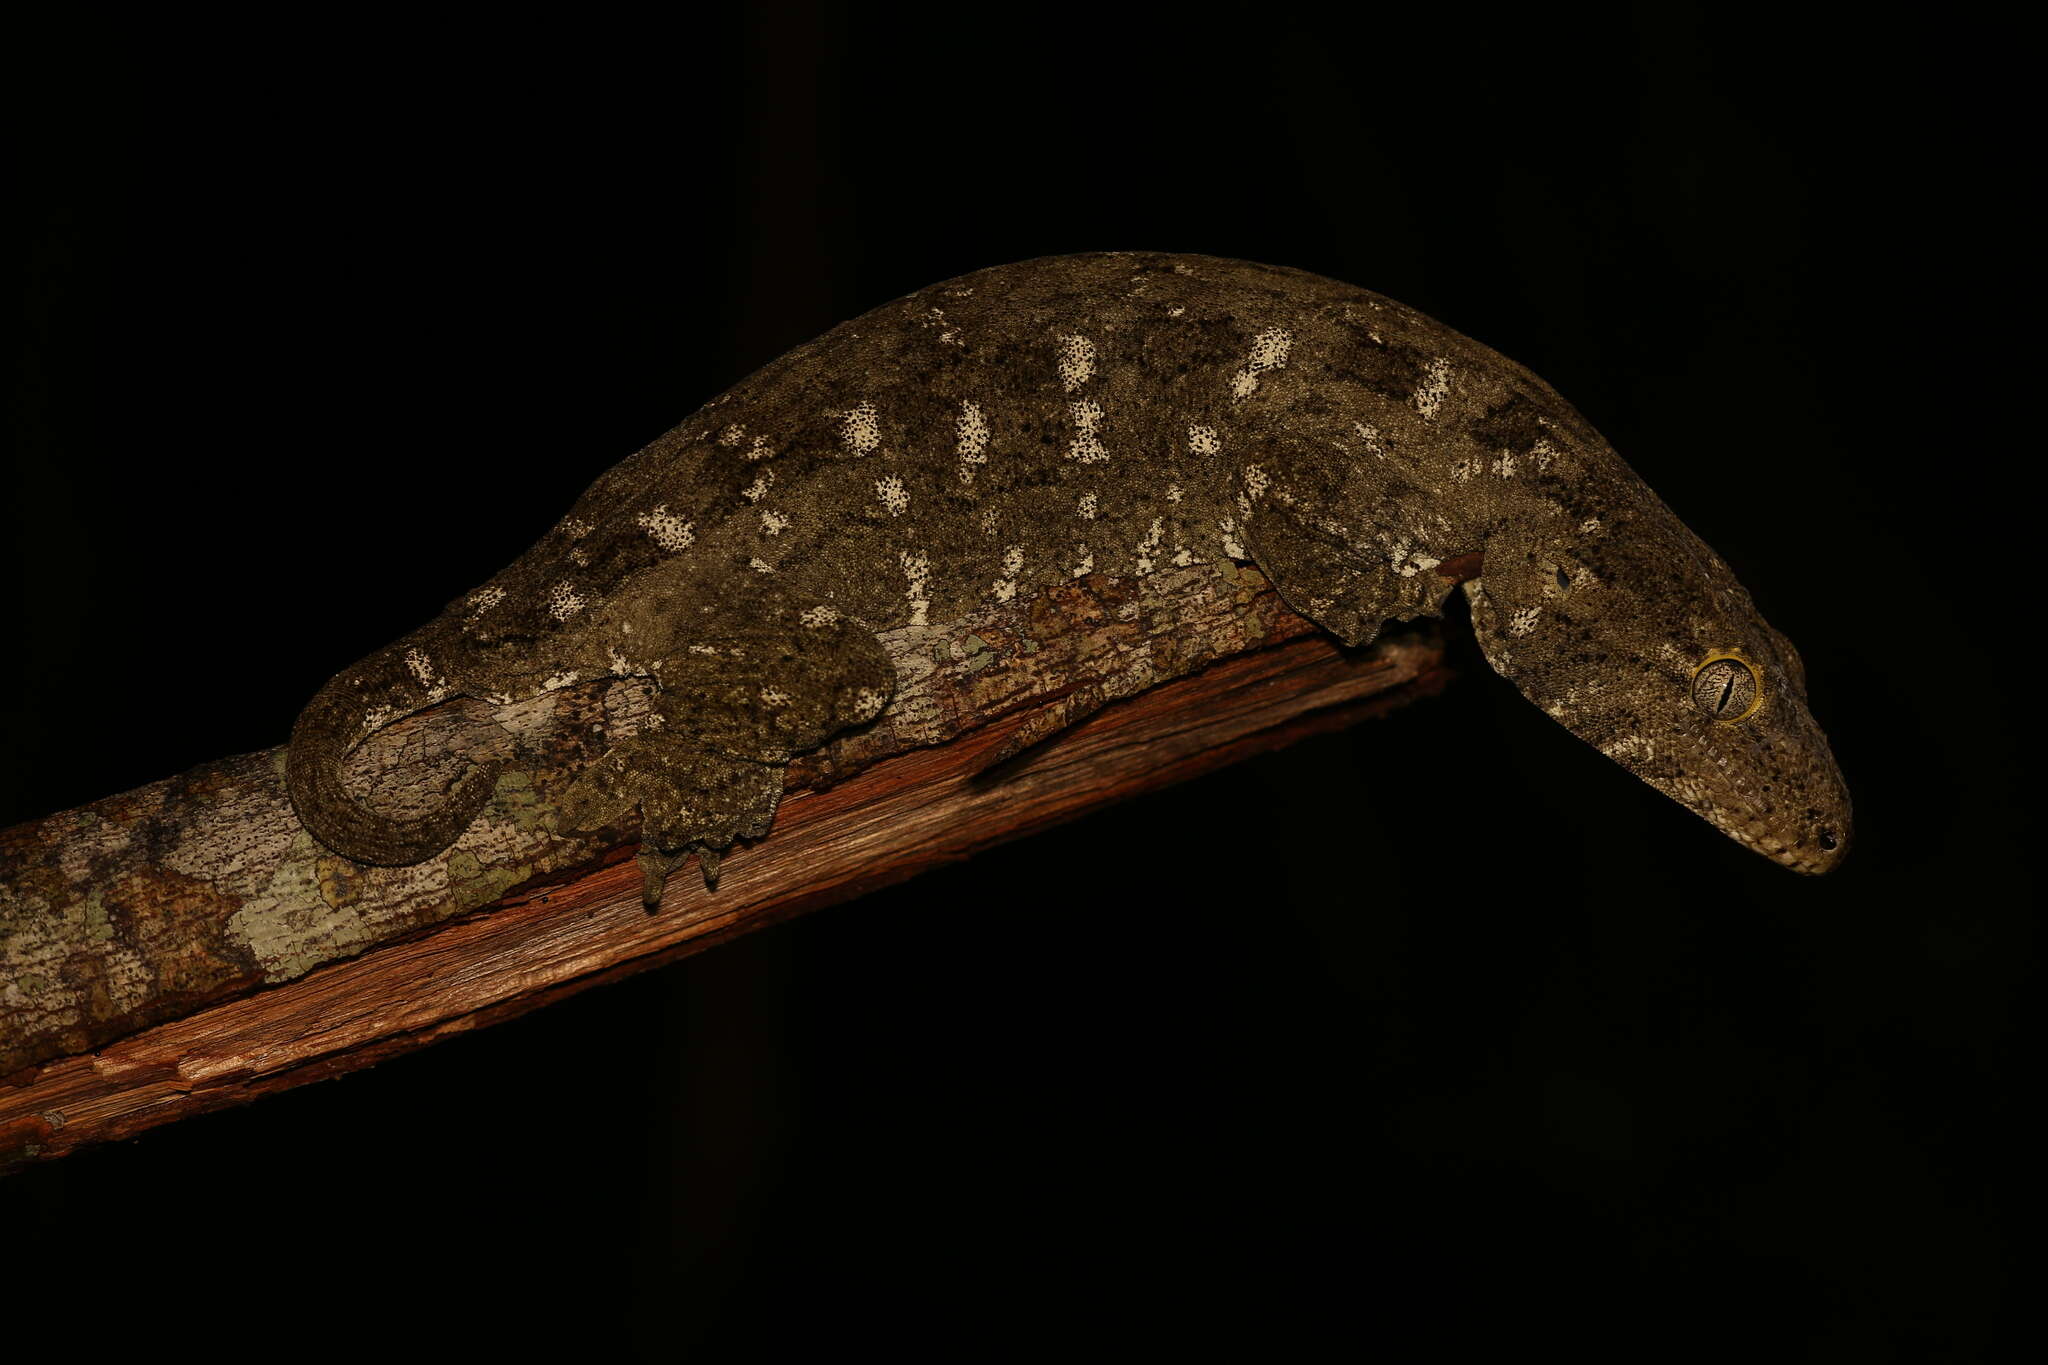 Image of New Caledonia Giant Gecko